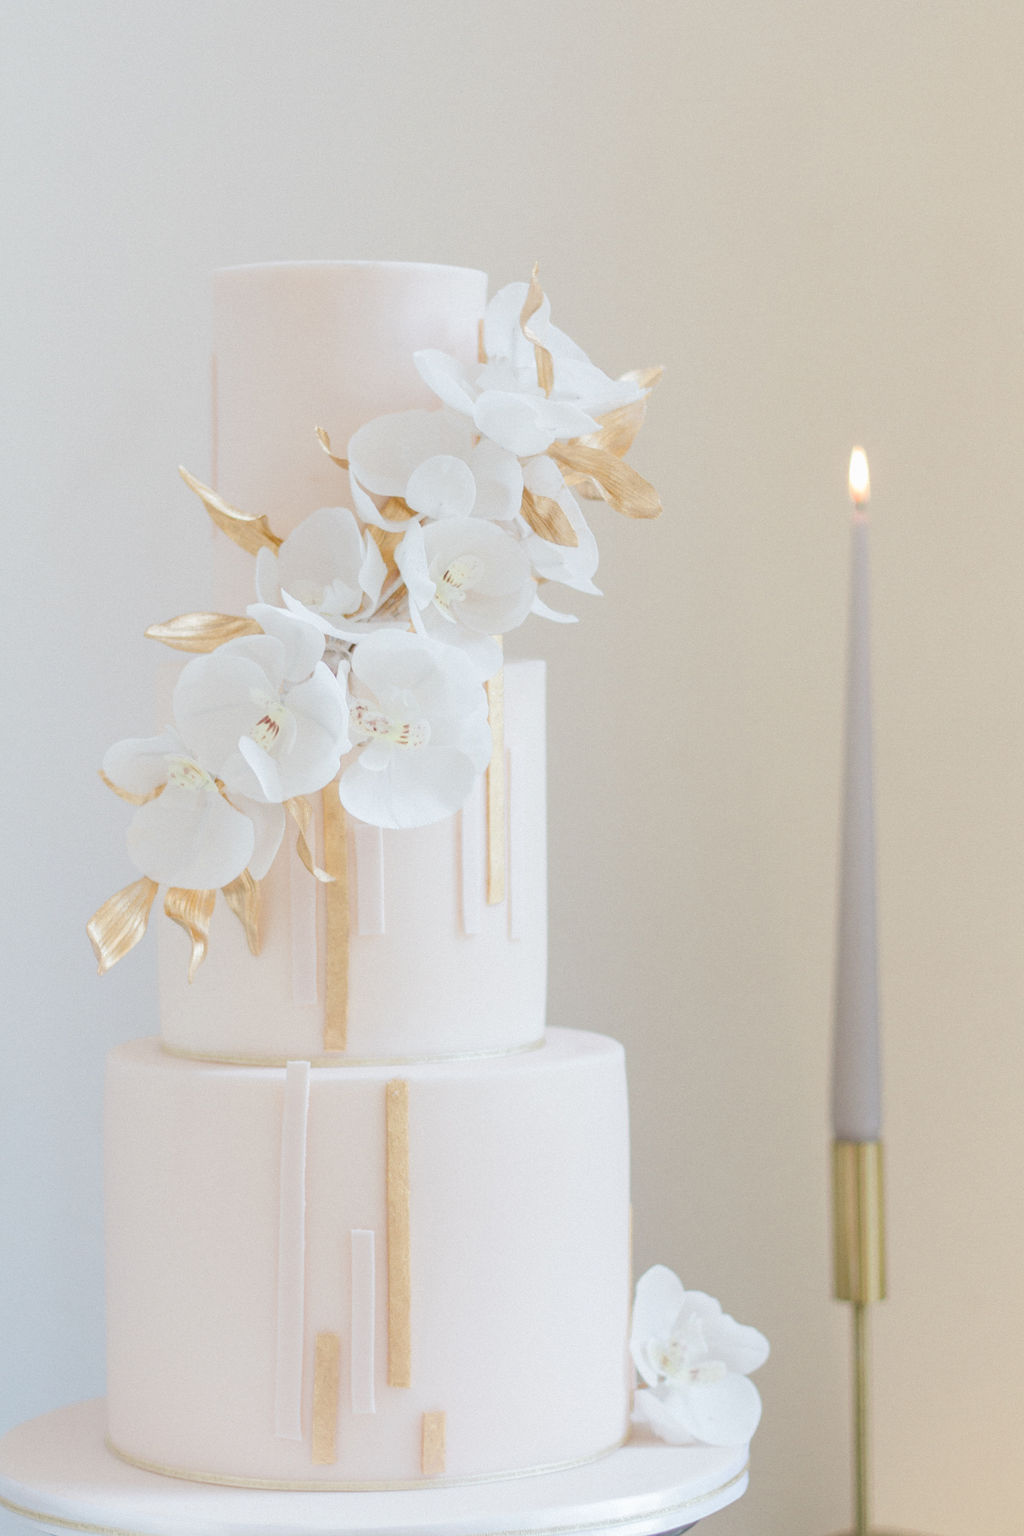 Art deco inspired wedding cake, modern vintage dessert table, wedding dessert table, bridal shoot, styled shoot inspiration